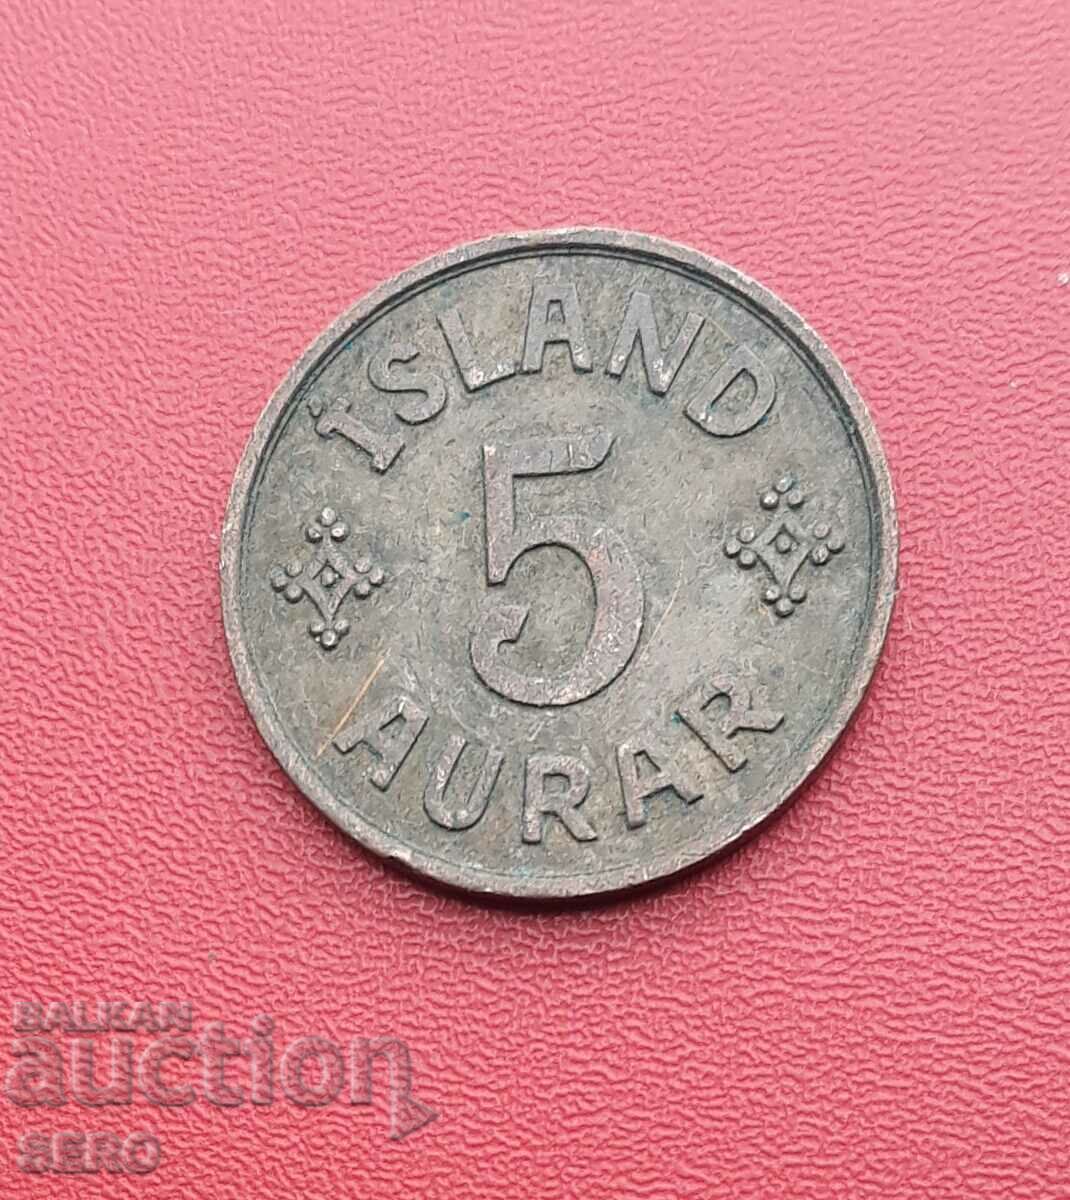 Iceland-5 aurar 1942